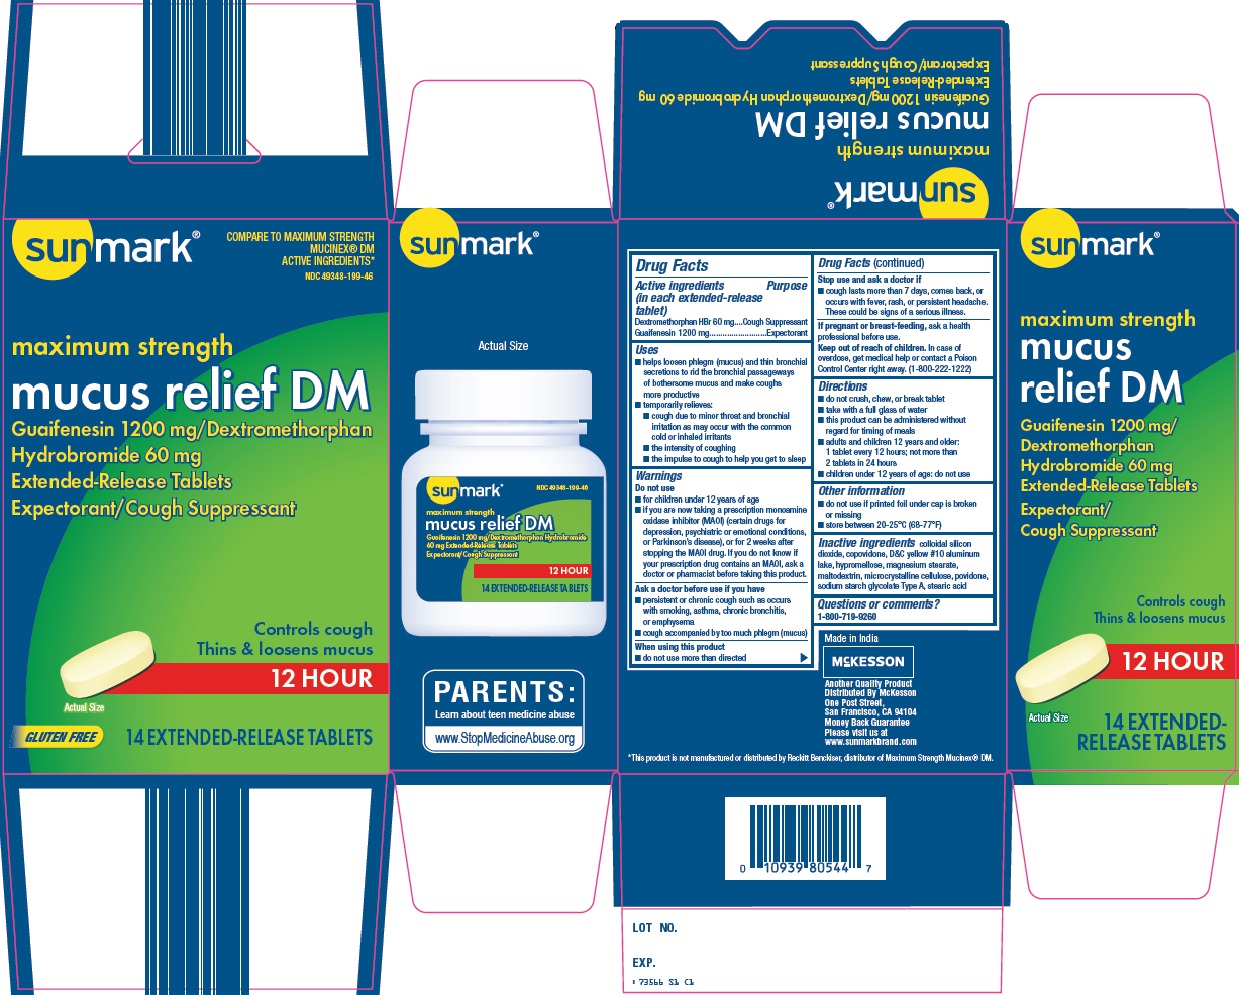 Sunmark Mucus Relief DM image